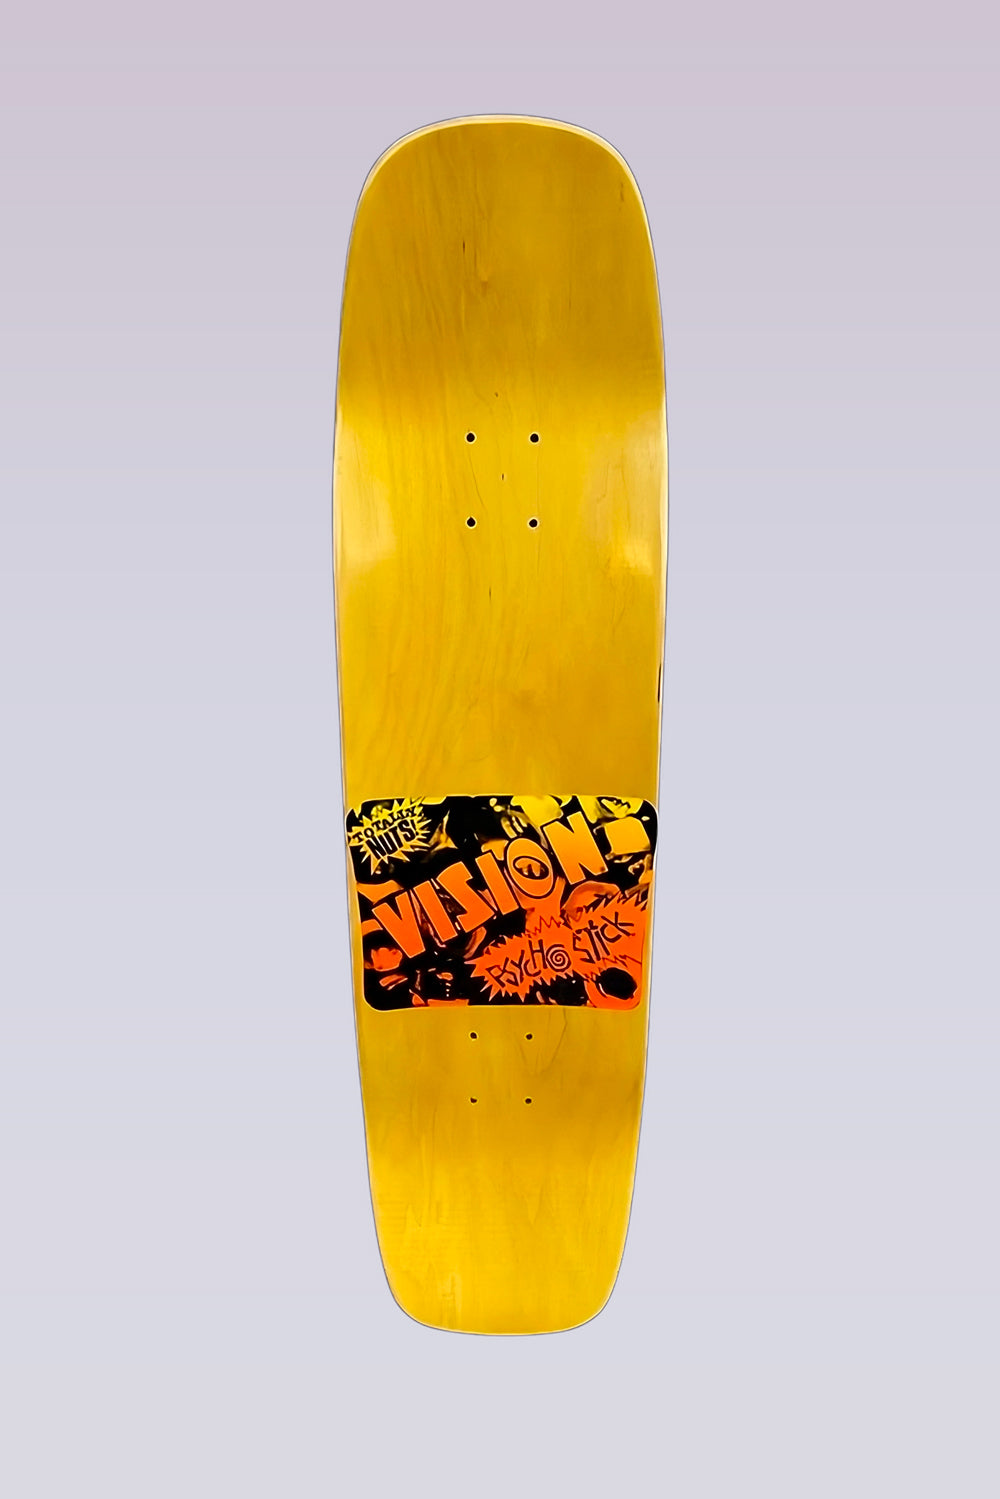 Psycho Stick - Modern Shaped Skateboard Deck - 8.875"X32.75" - Yellow